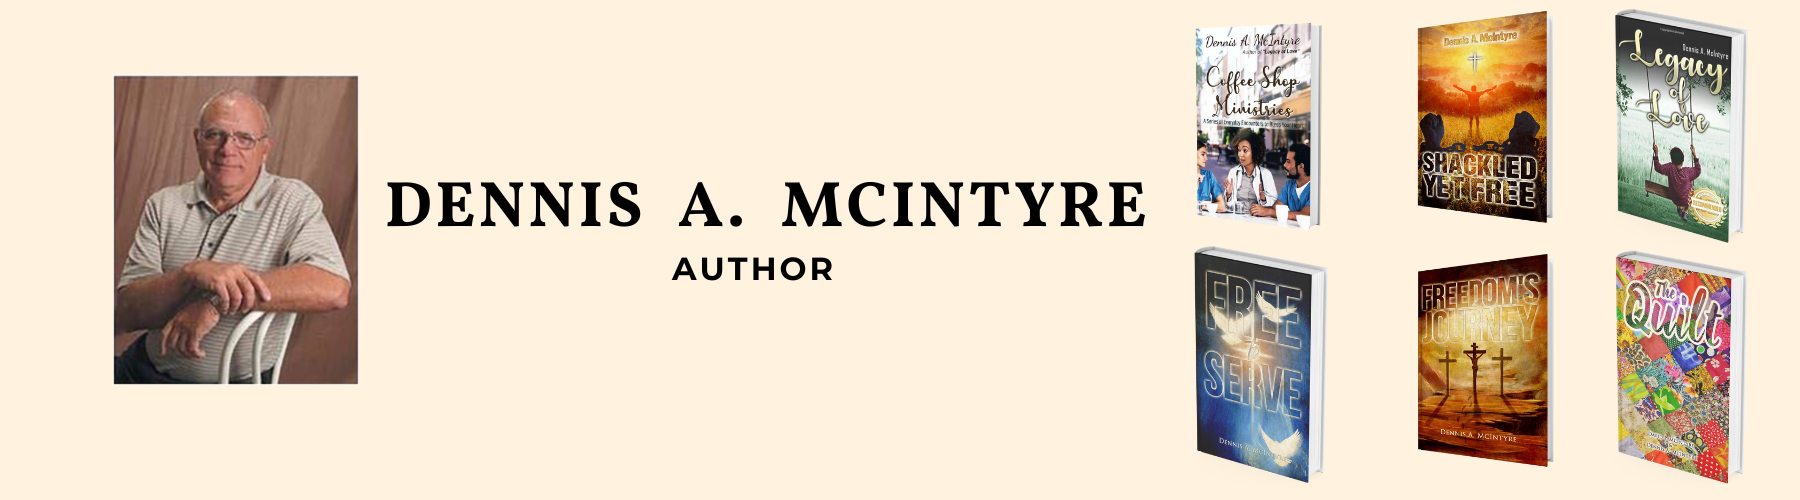 DENNIS A. MCINTYRE (1)